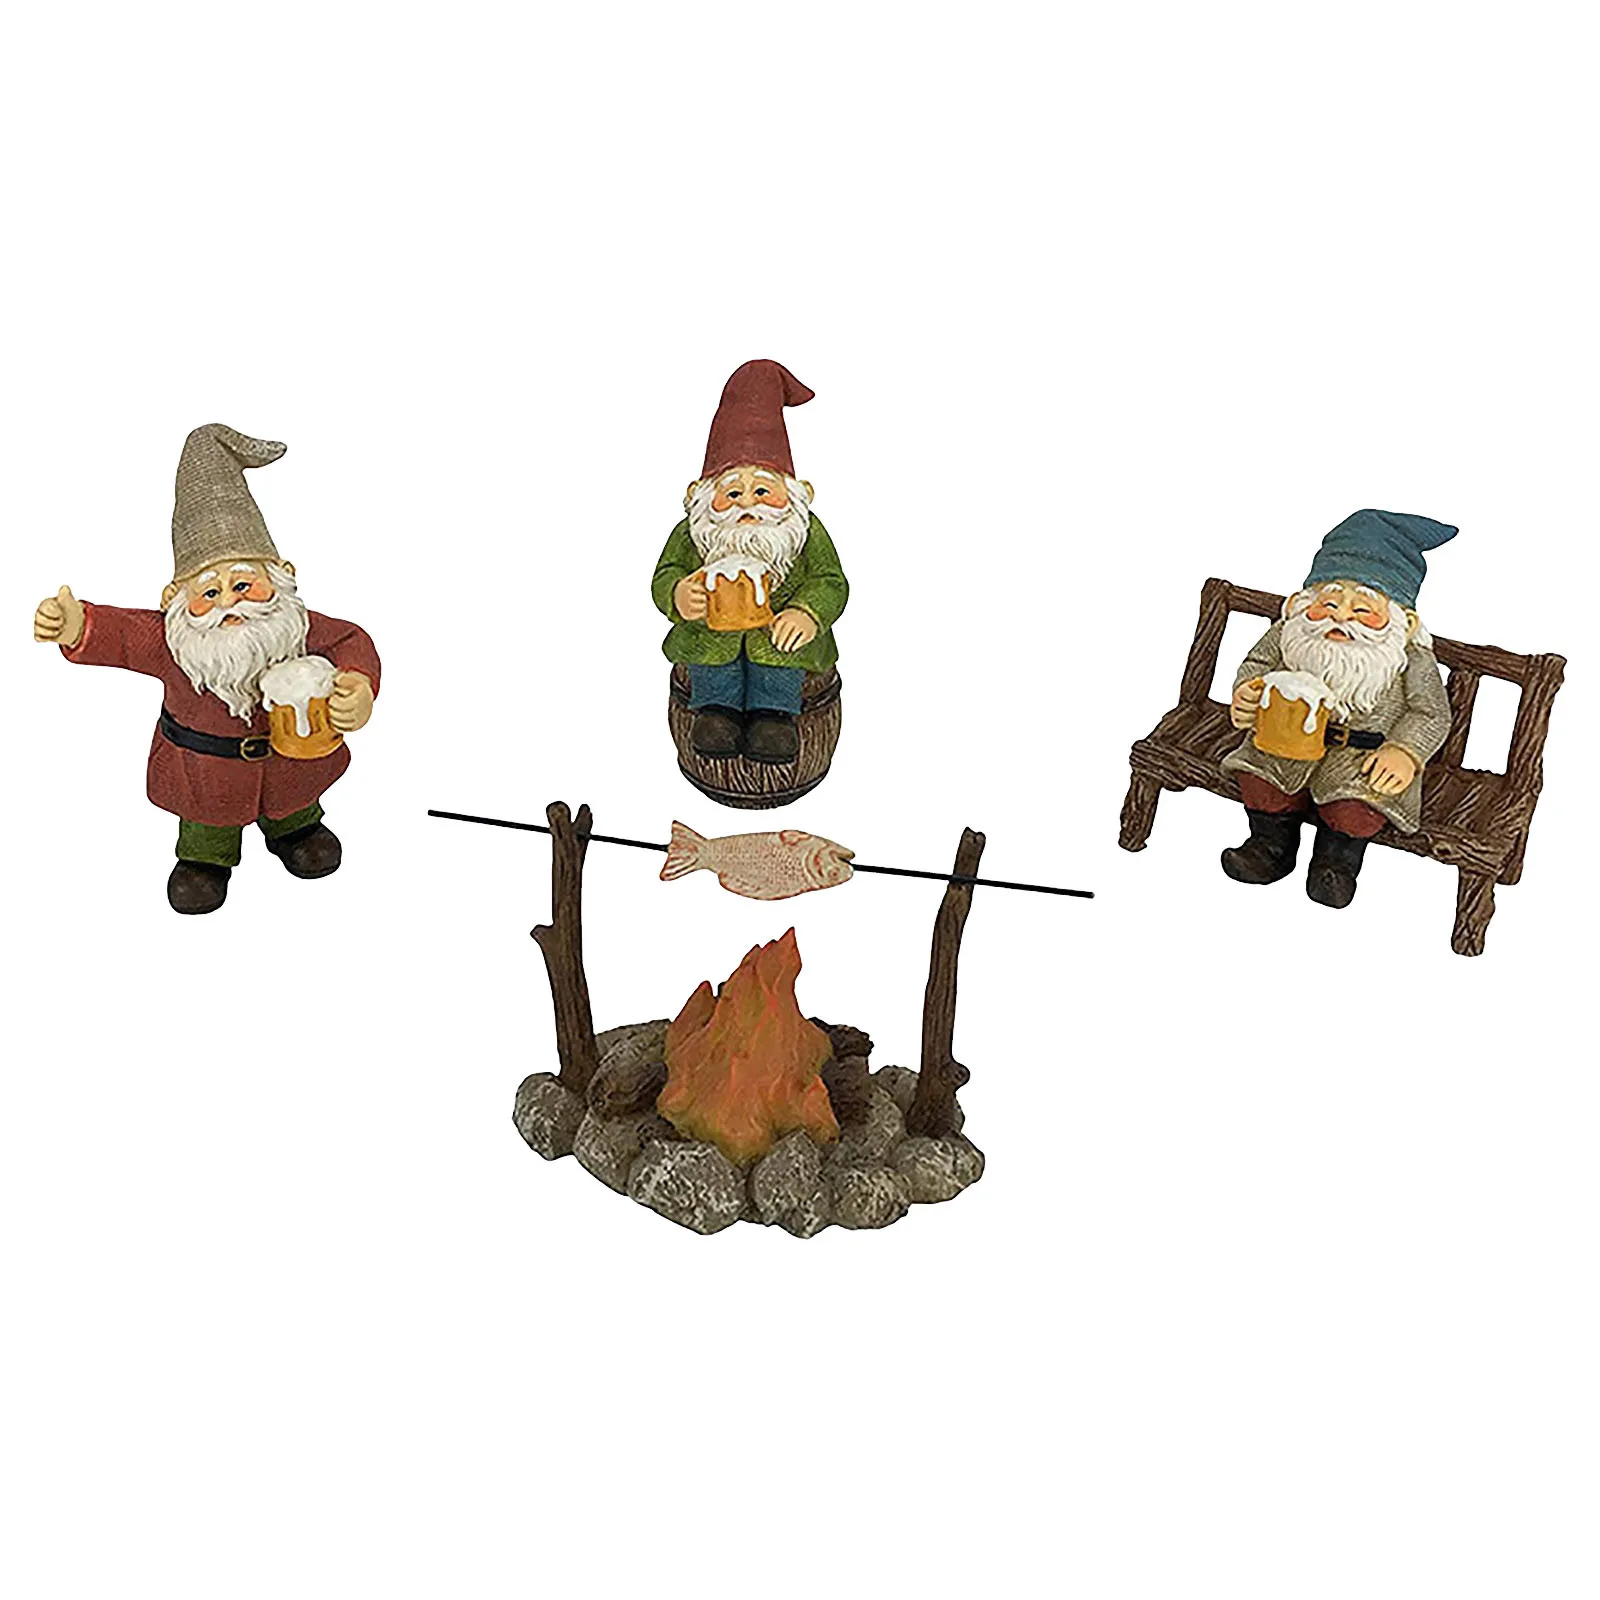 

Mini Garden Gnome Statue Barbecue Party Dwarf Elf Figurines Miniature Landscape Outdoor Ornaments Home Decoration Art Crafts